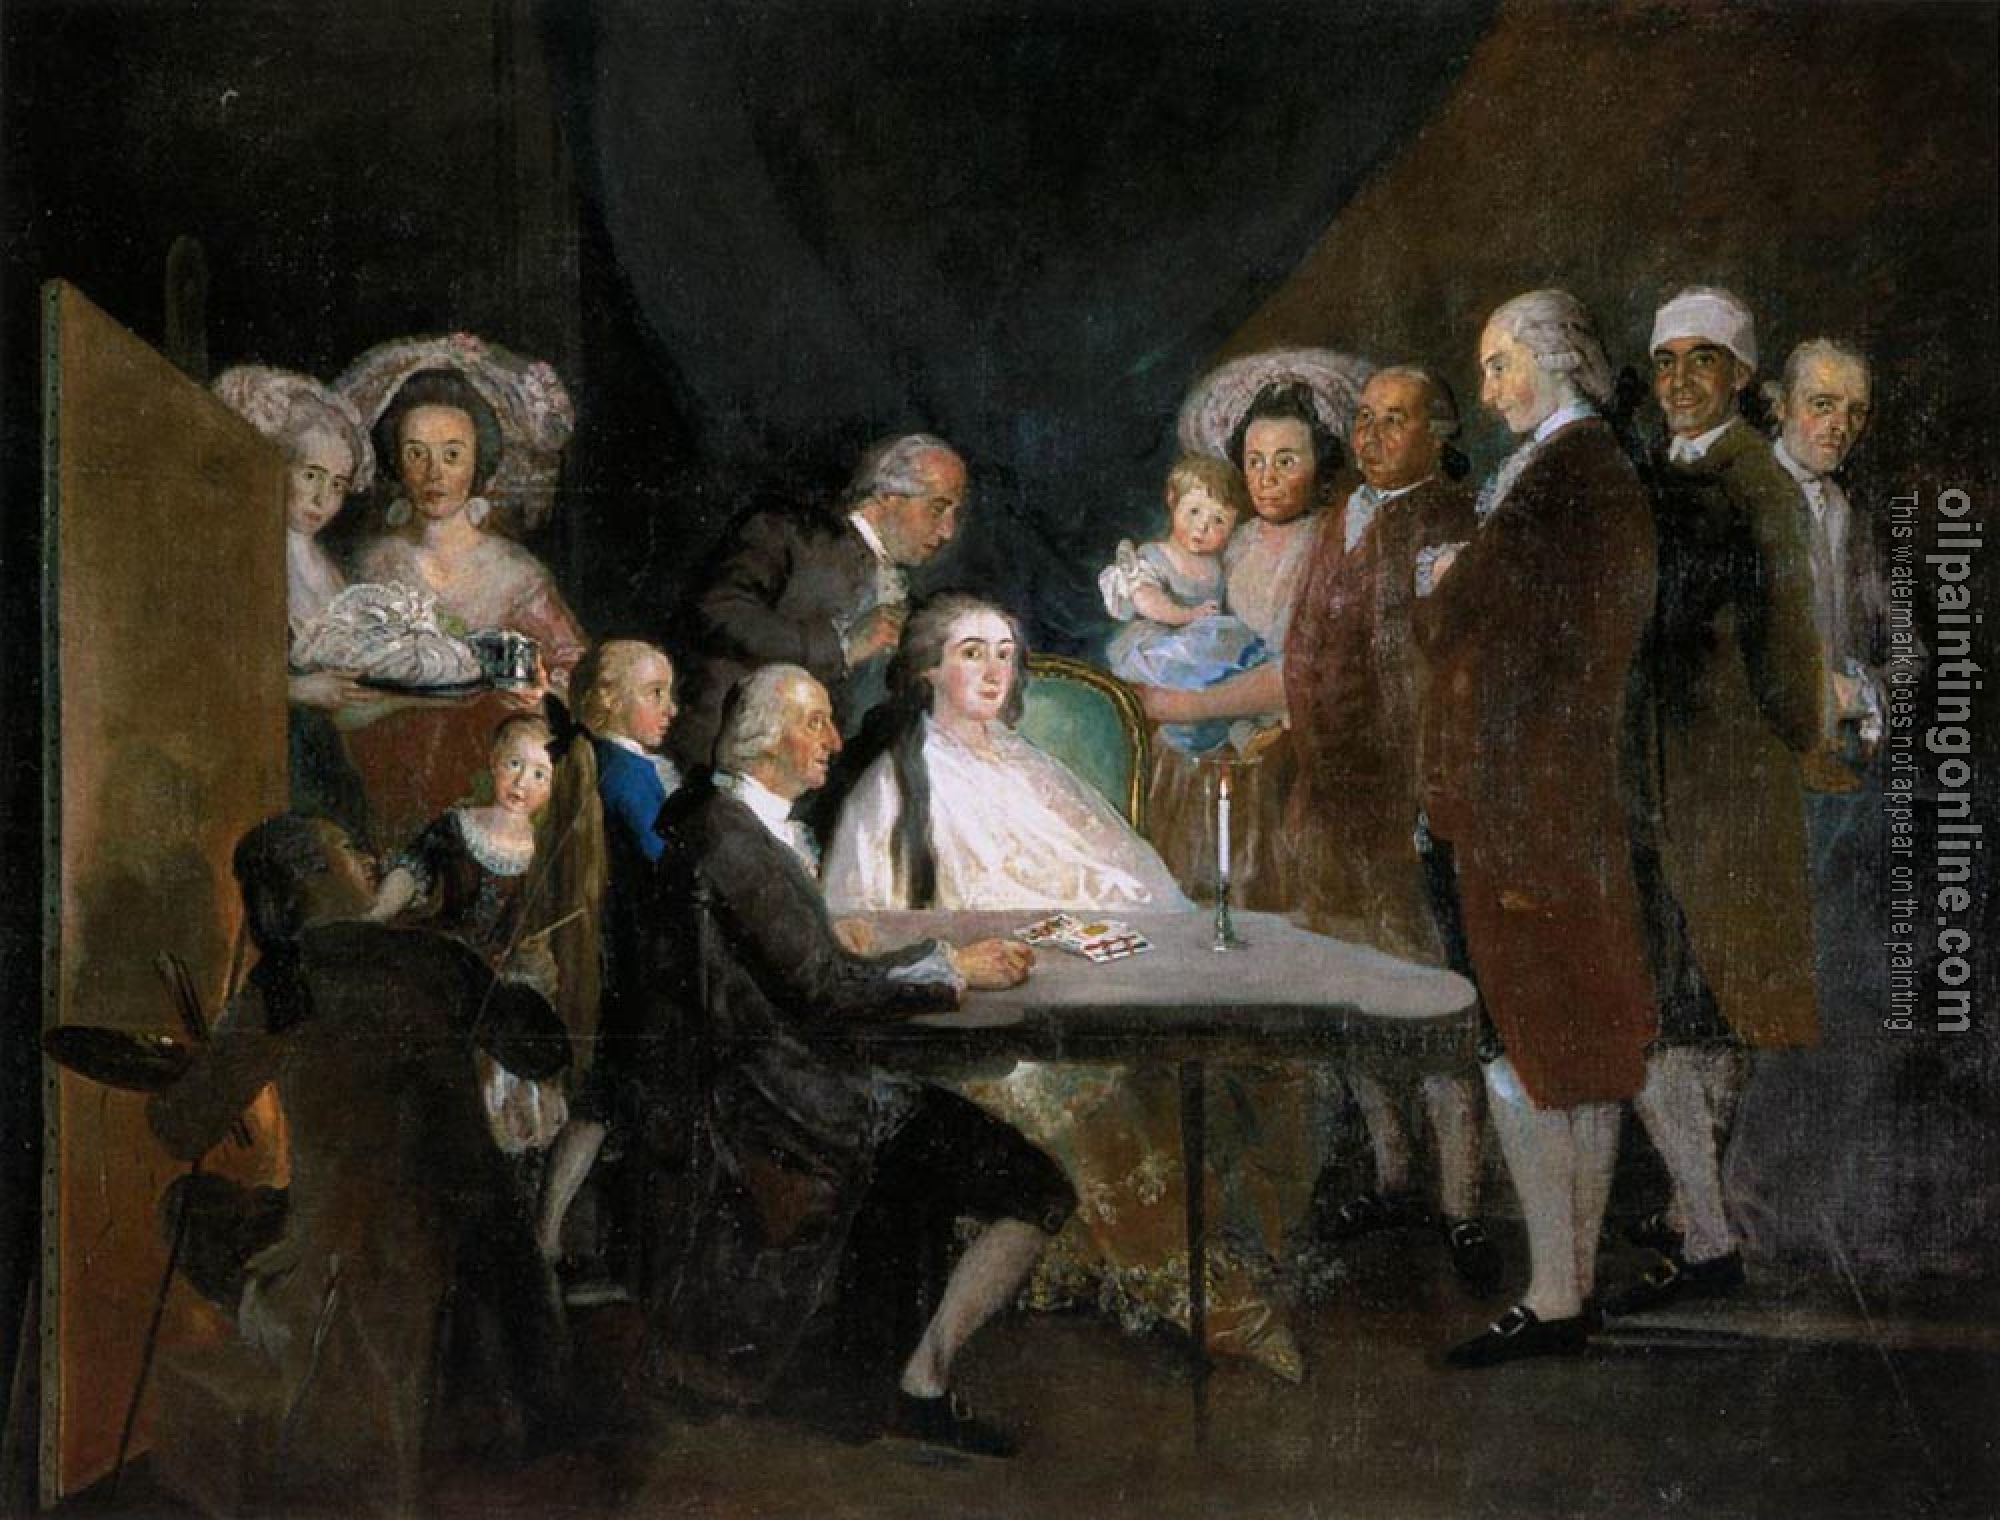 Goya, Francisco de - The Family of the Infante Don